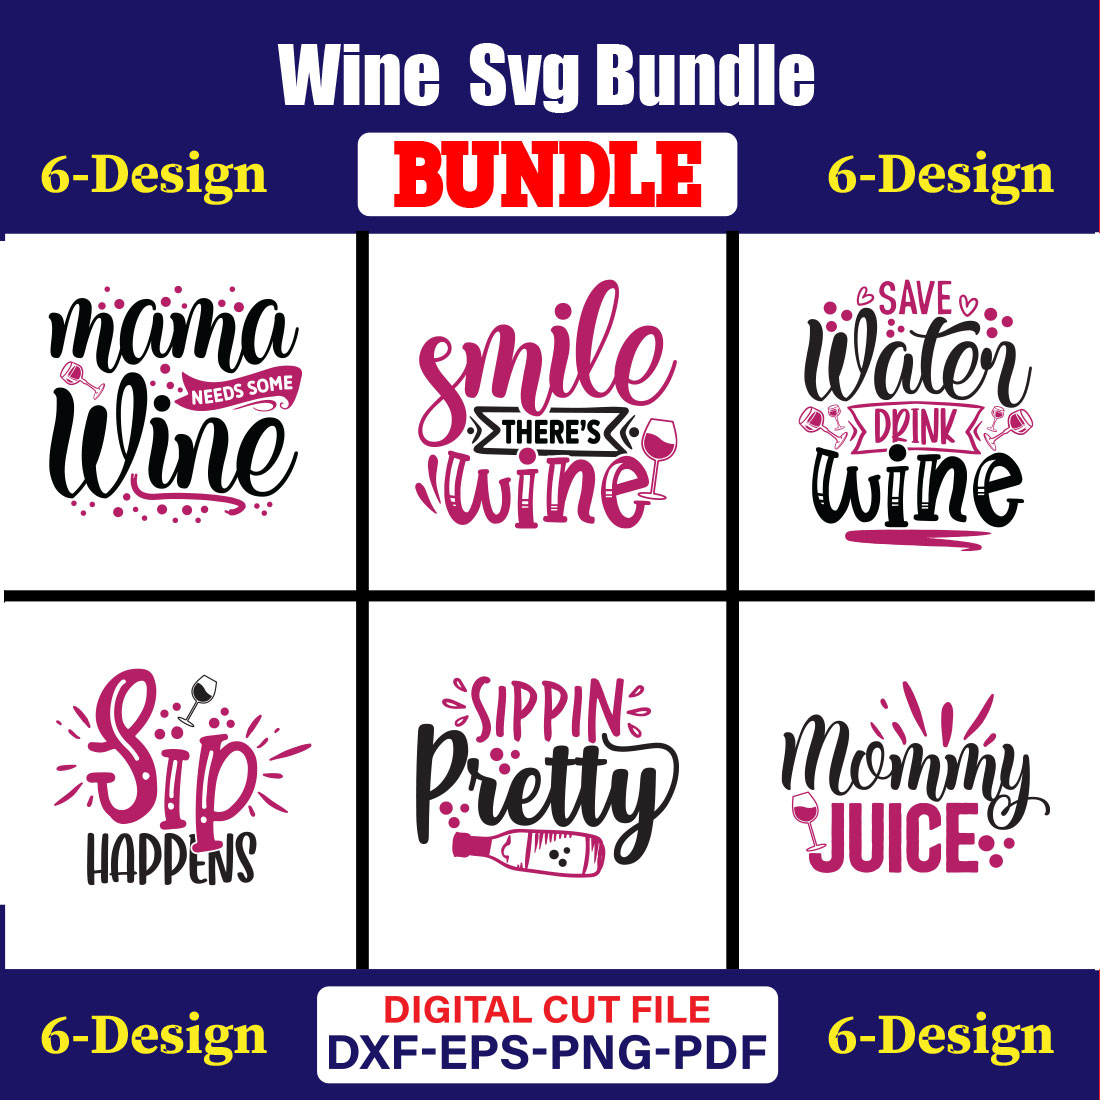 Wine T-shirt Design Bundle Vol-04 cover image.